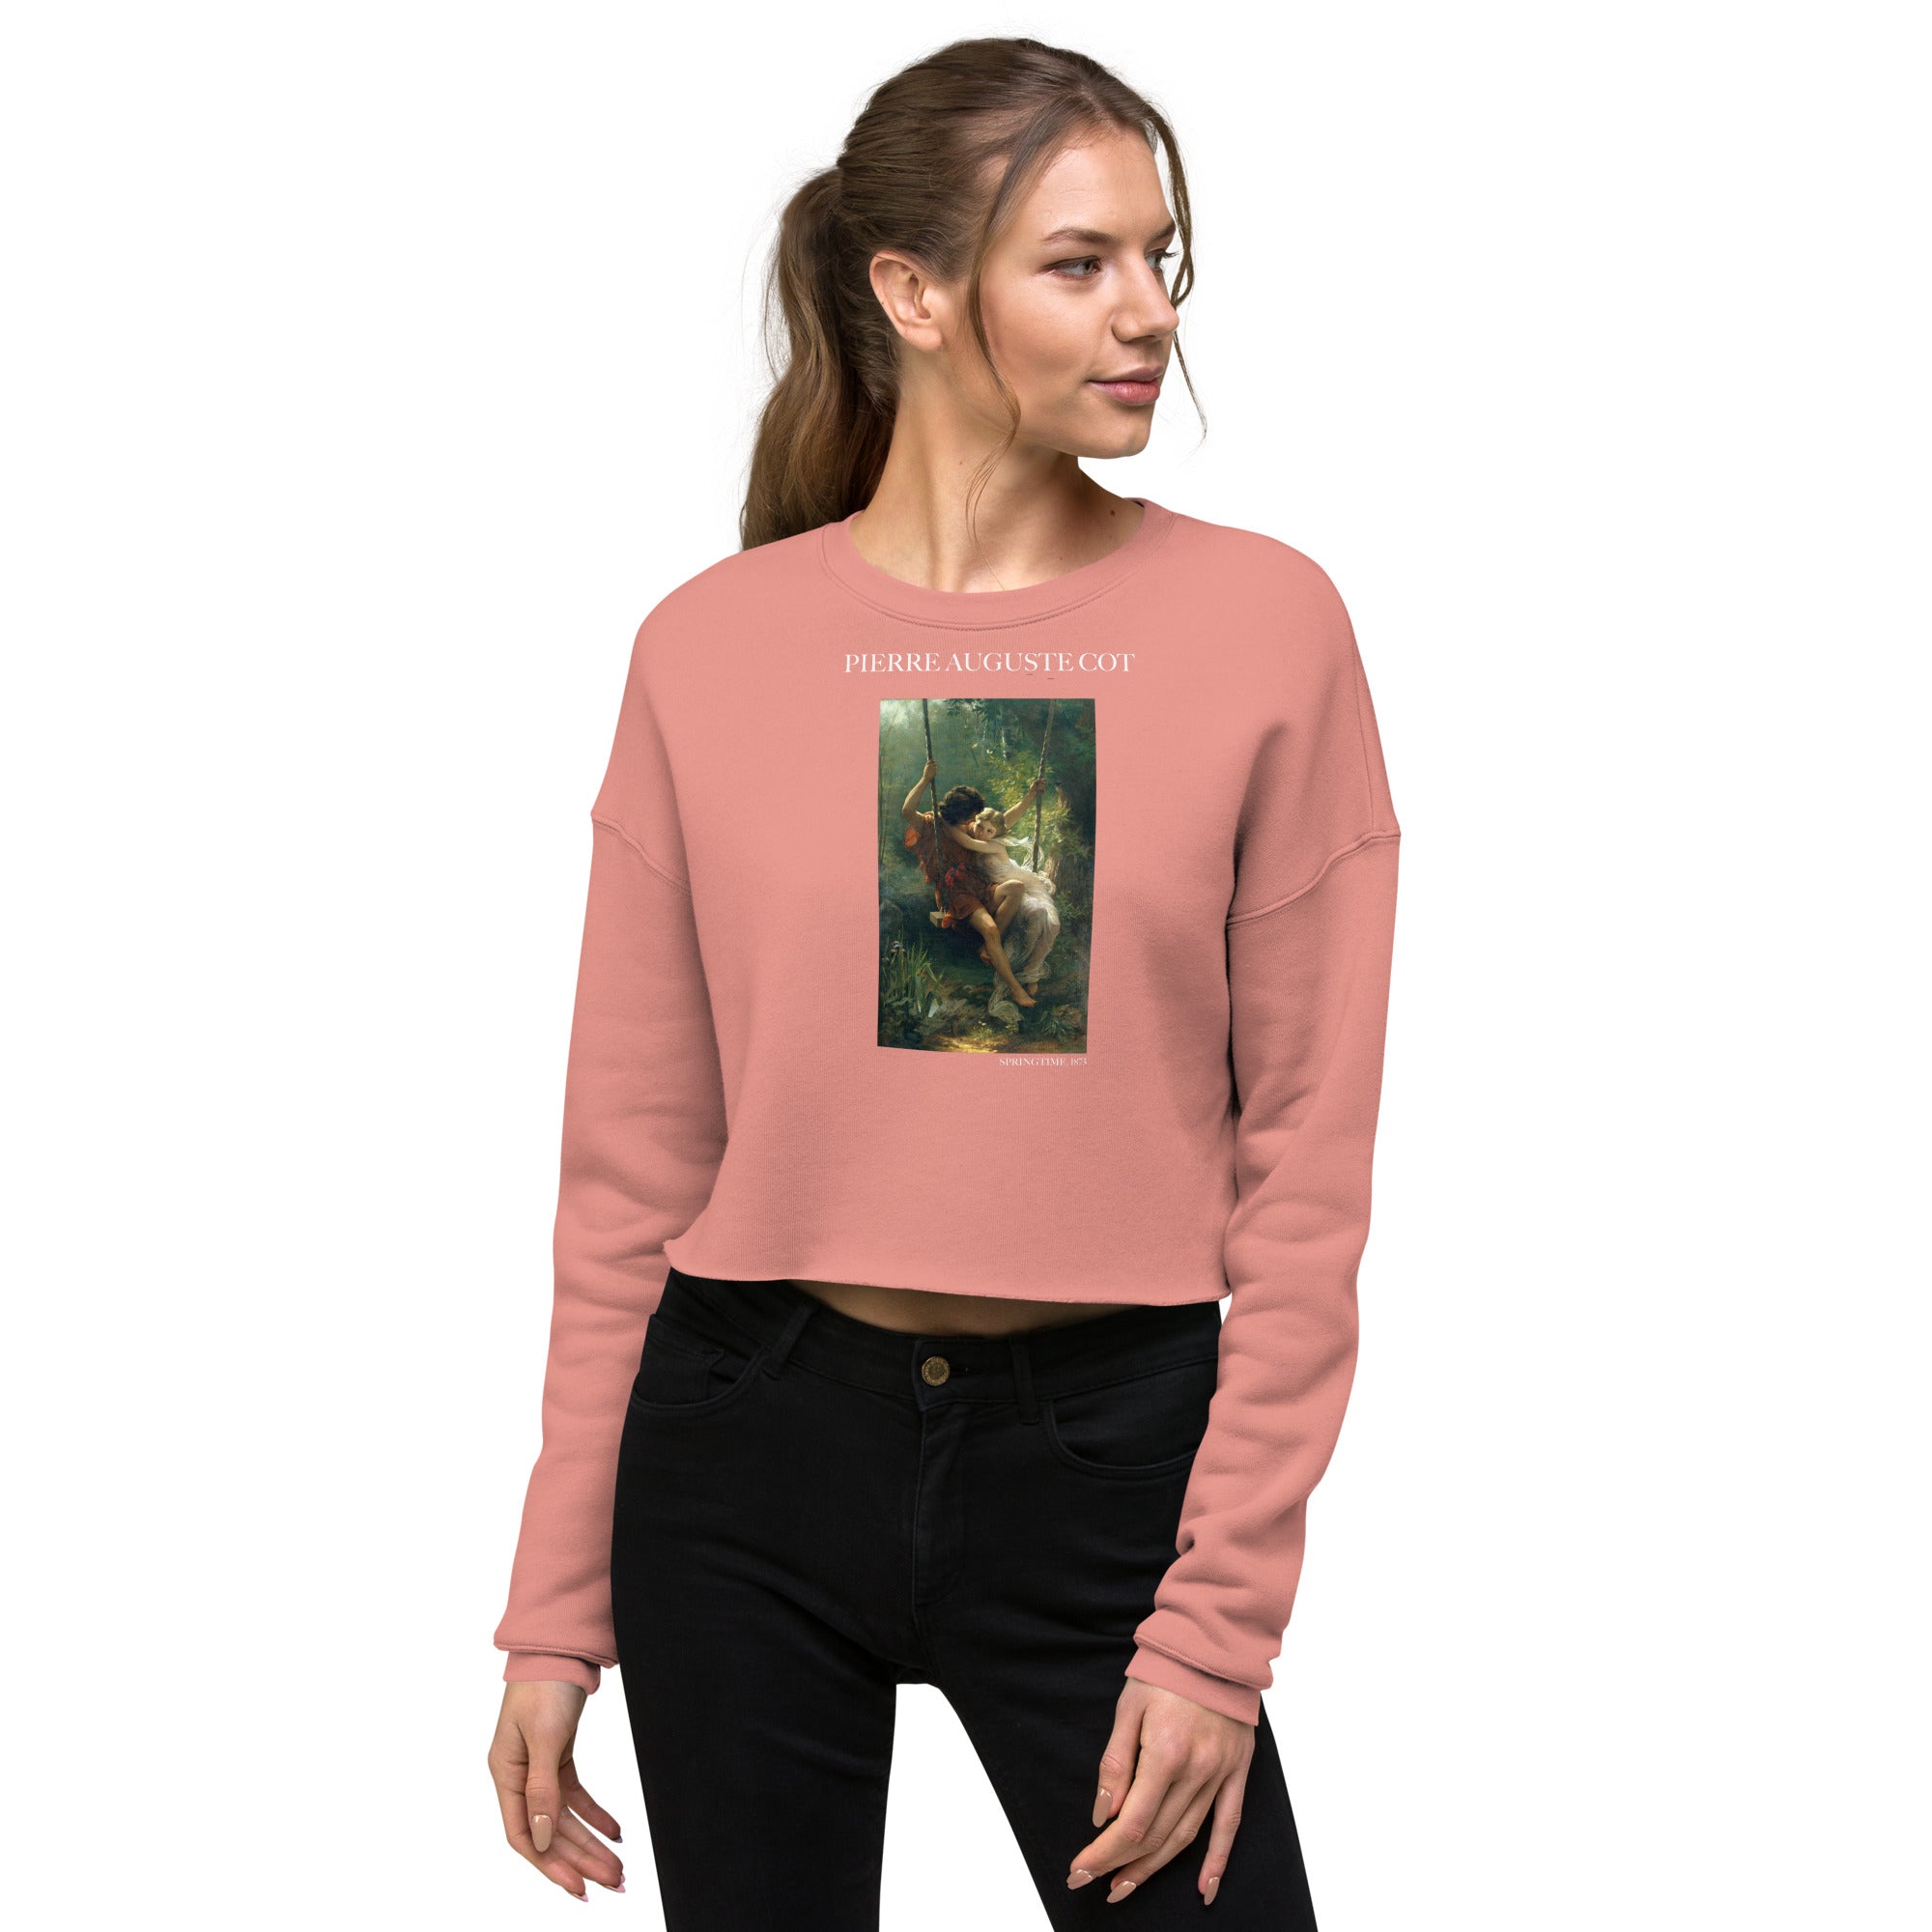 Pierre Auguste Cot 'Springtime' Famous Painting Cropped Sweatshirt | Premium Art Cropped Sweatshirt